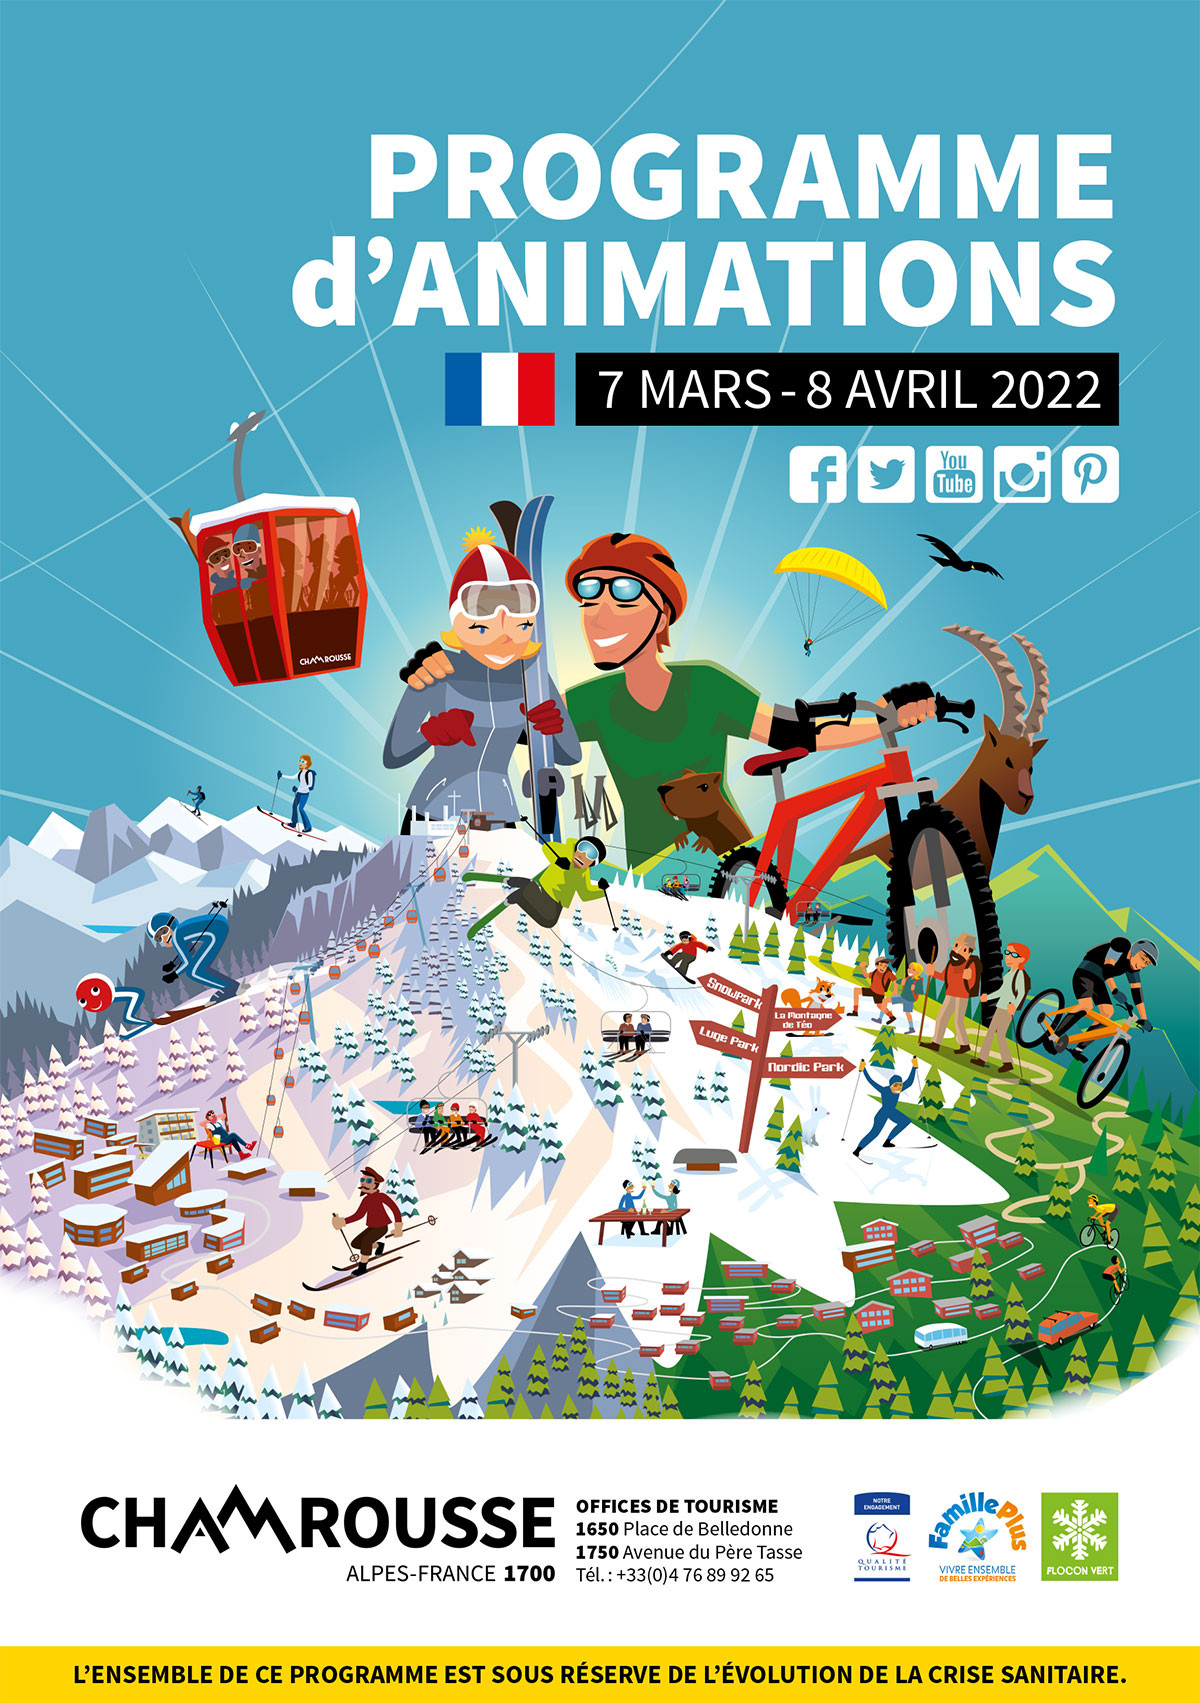 Chamrousse programme animation événement hiver mars 2022  station ski montagne grenoble isère alpes france